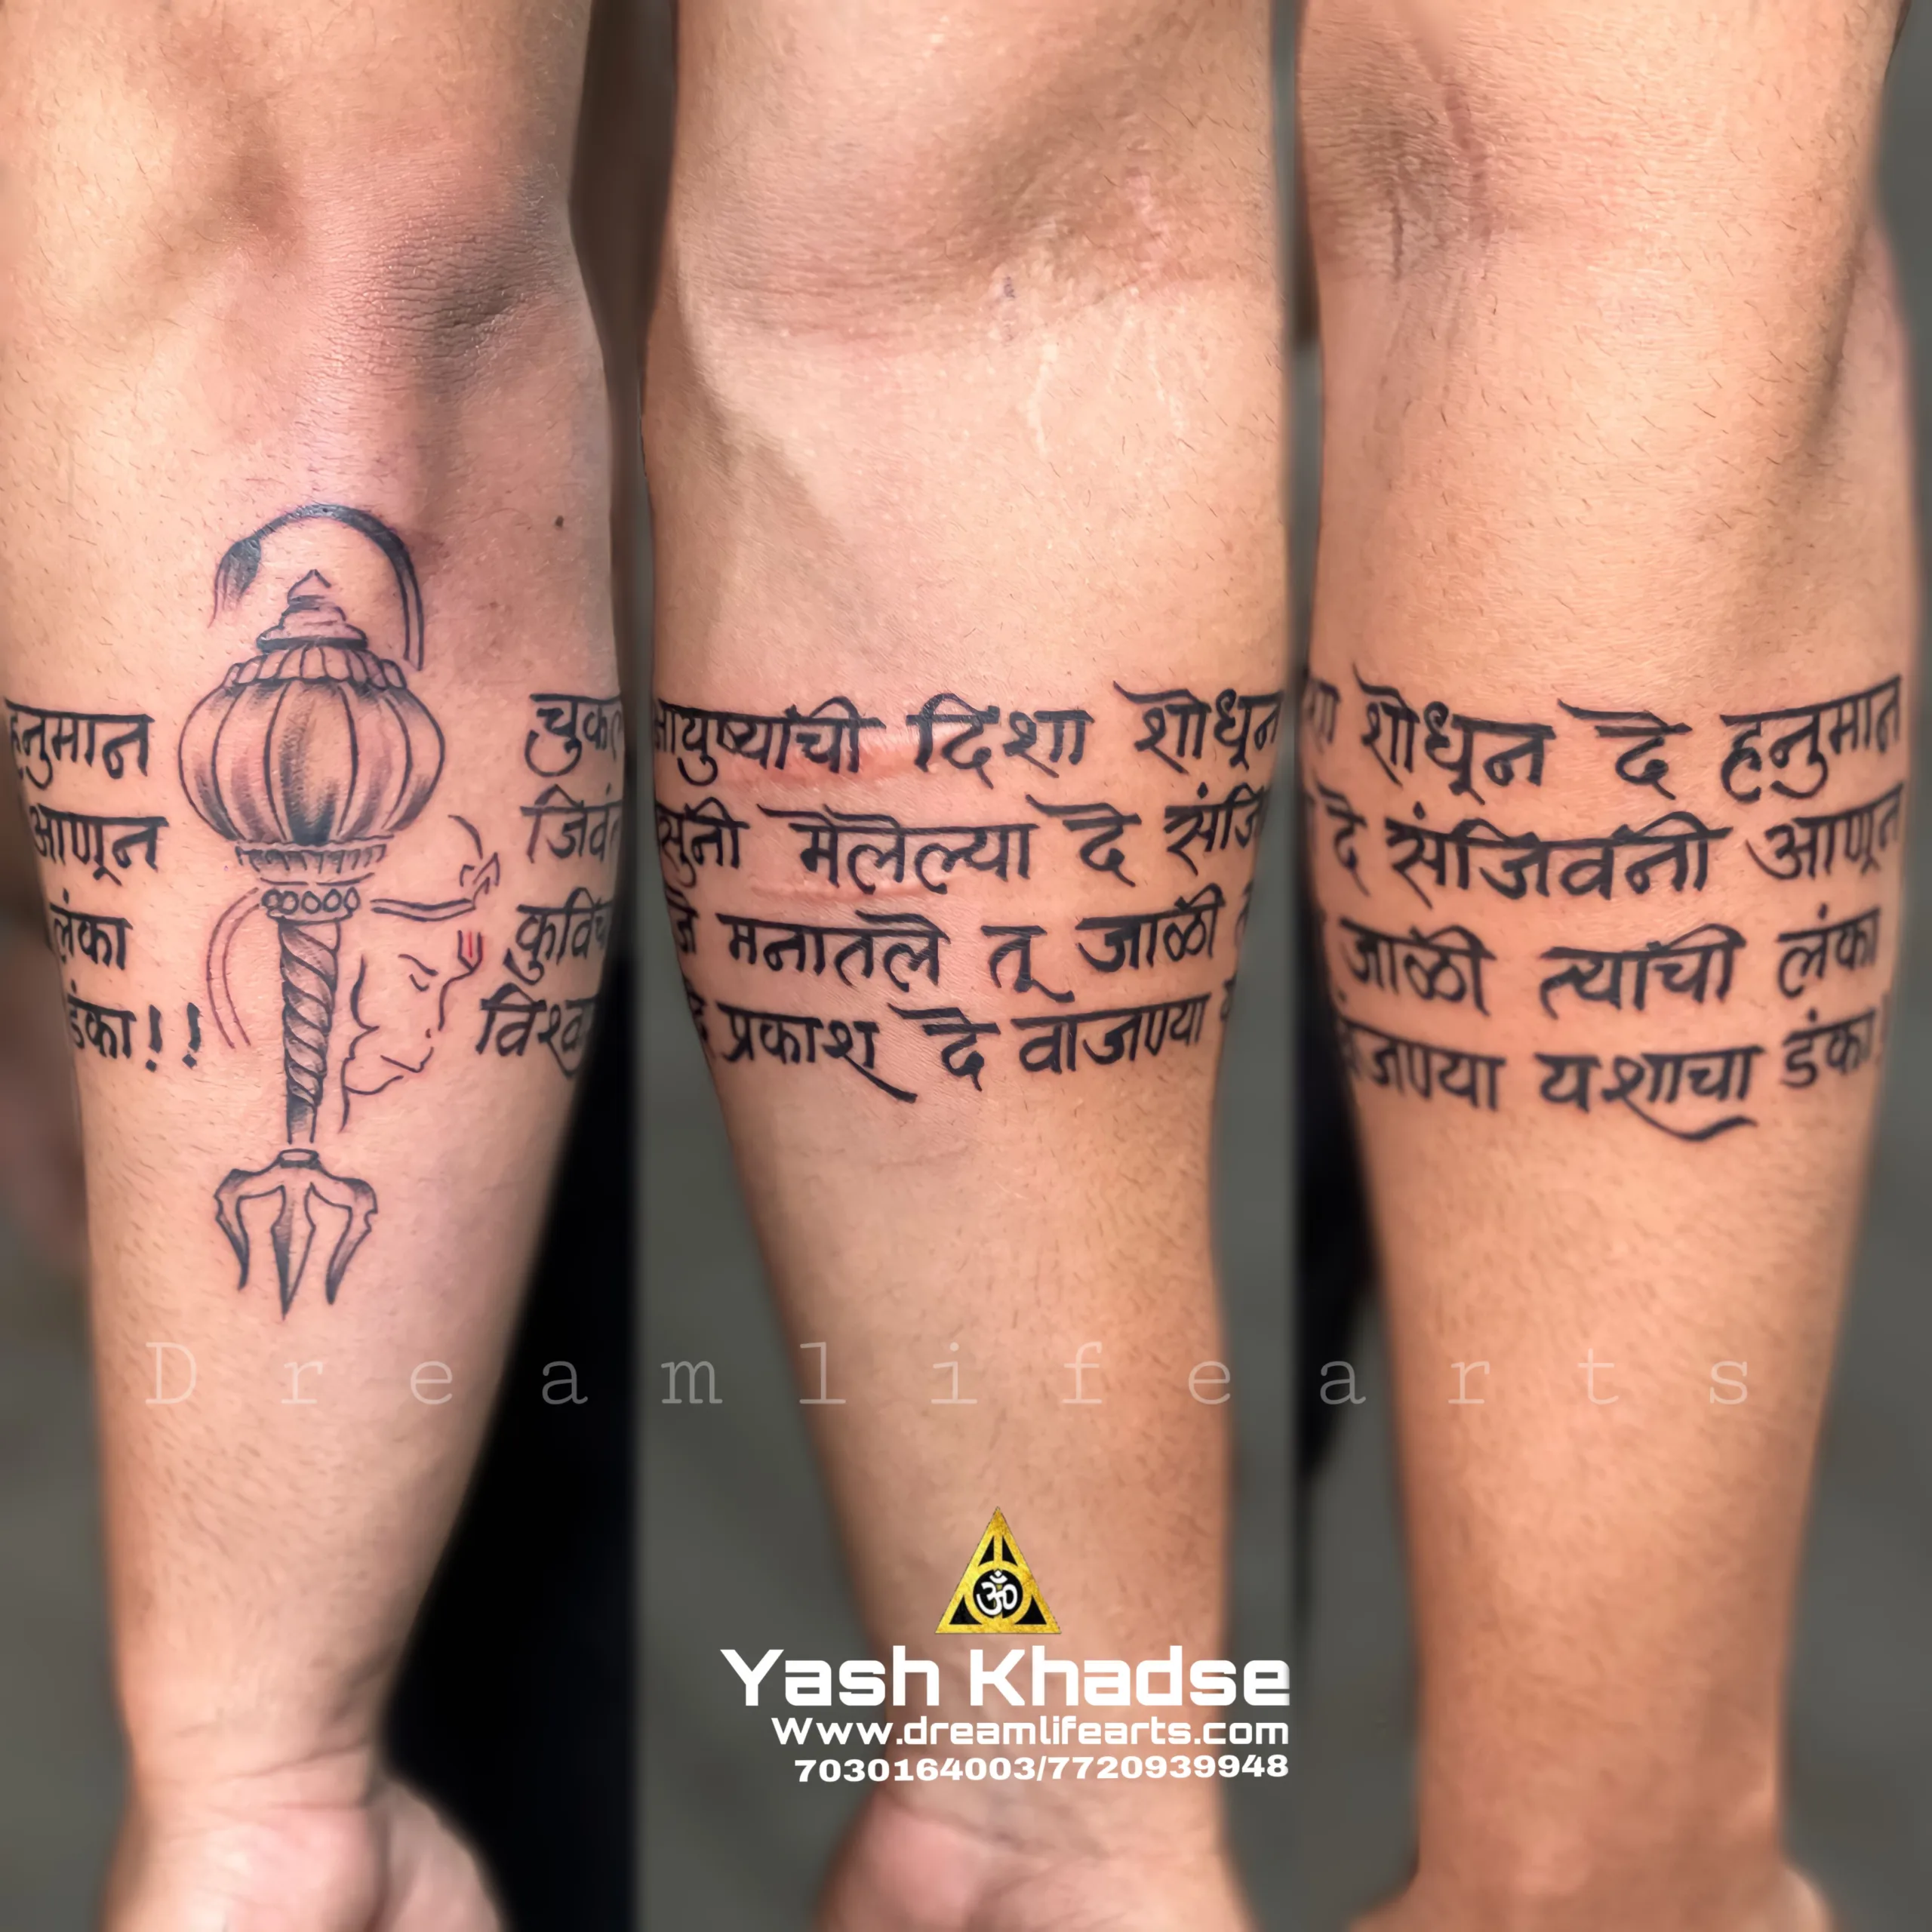 Hanuman and lord shiva concept for more tattoo follow @crystal_tattooz  kaithal | Instagram